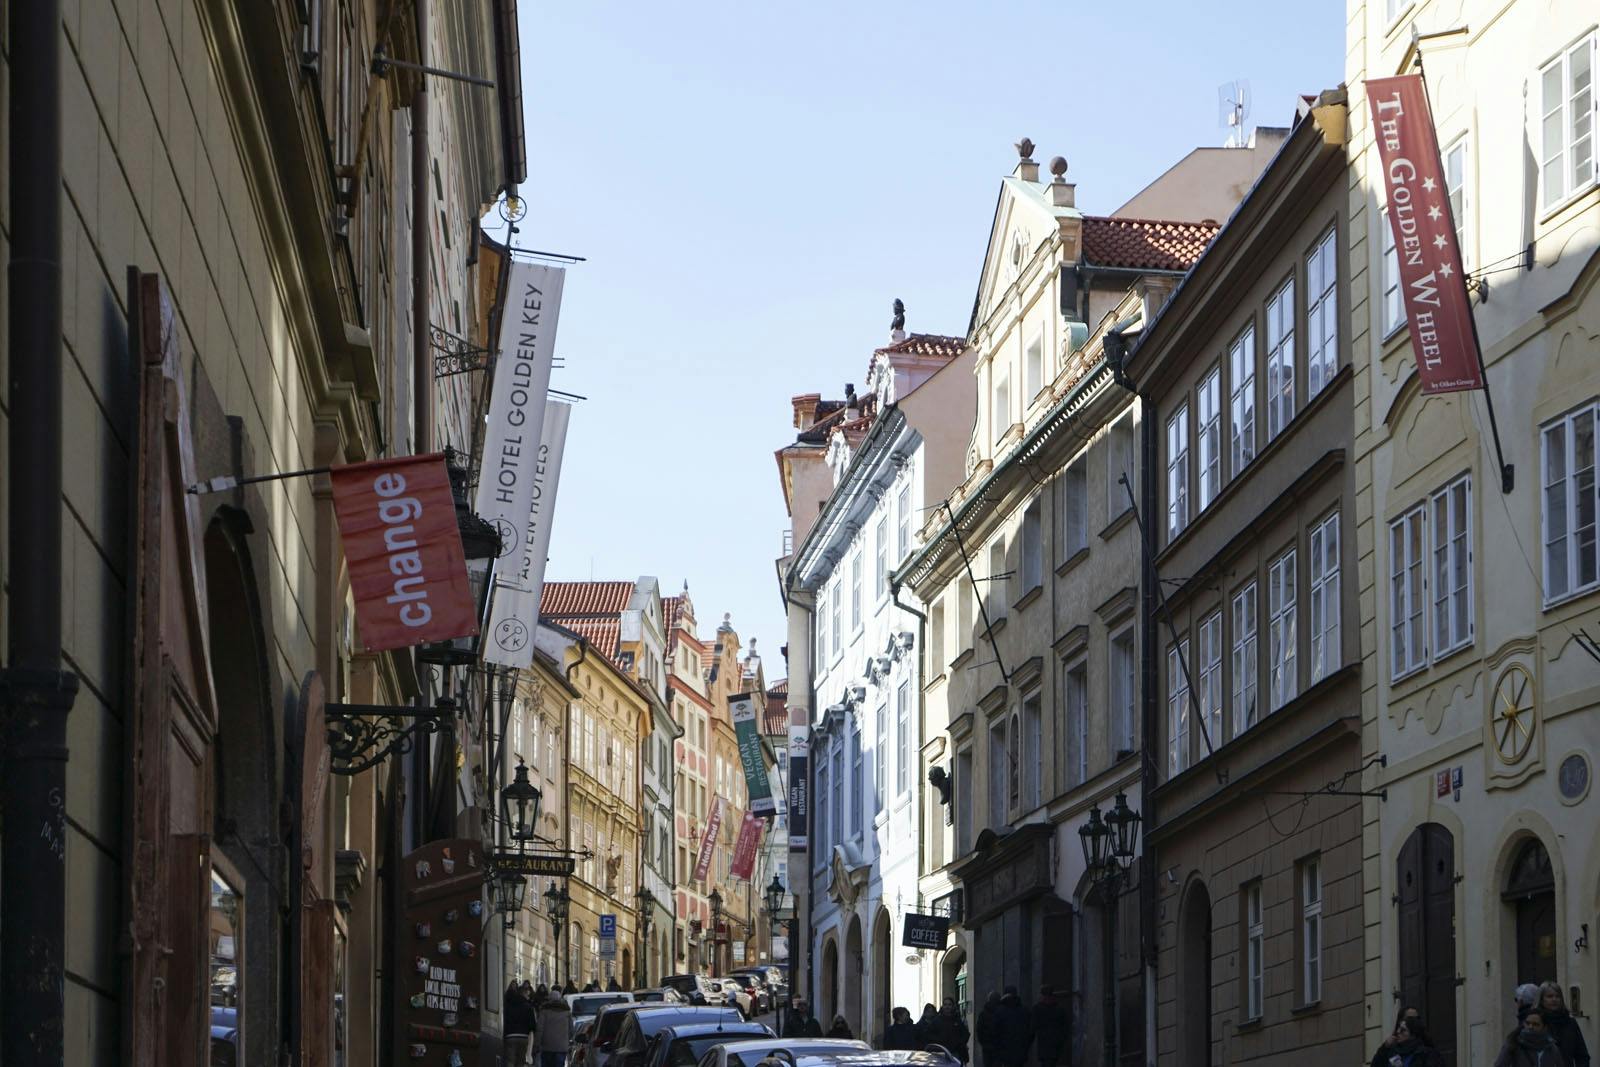 Mala Strana interactive city discovery adventure in Prague